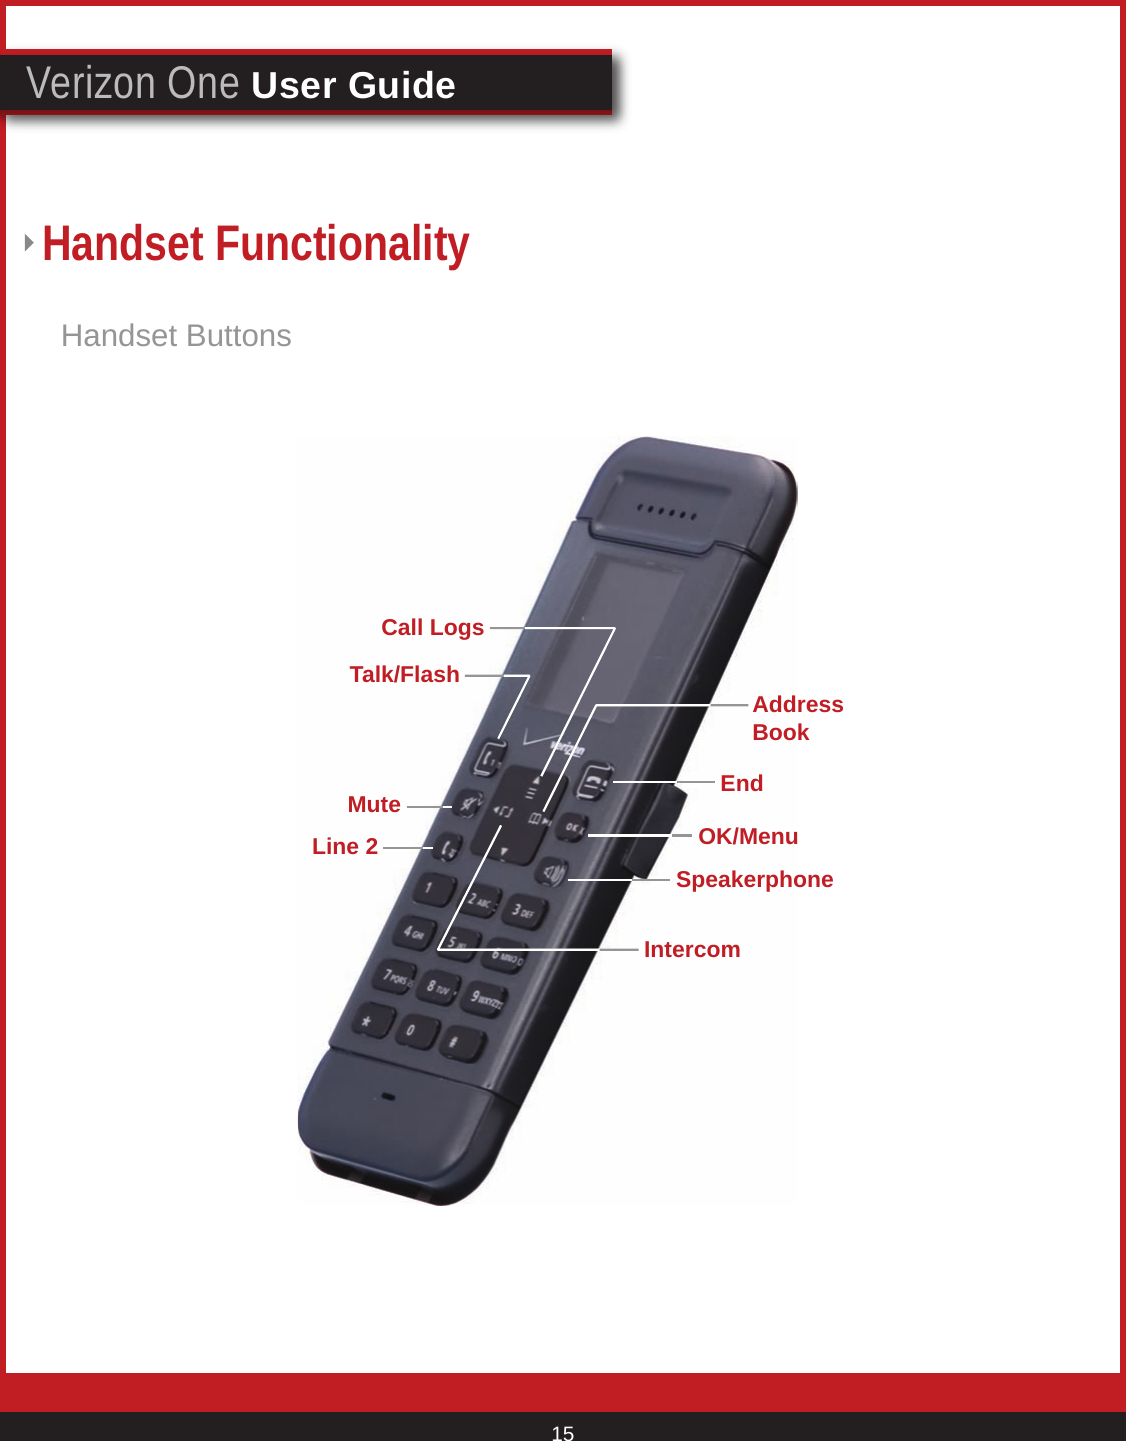 © 2007 Verizon. All Rights Reserved. 15Verizon One User GuideHandset FunctionalityHandset Buttons        Call LogsTalk/FlashMuteLine 2IntercomAddressBookEndOK/MenuSpeakerphone